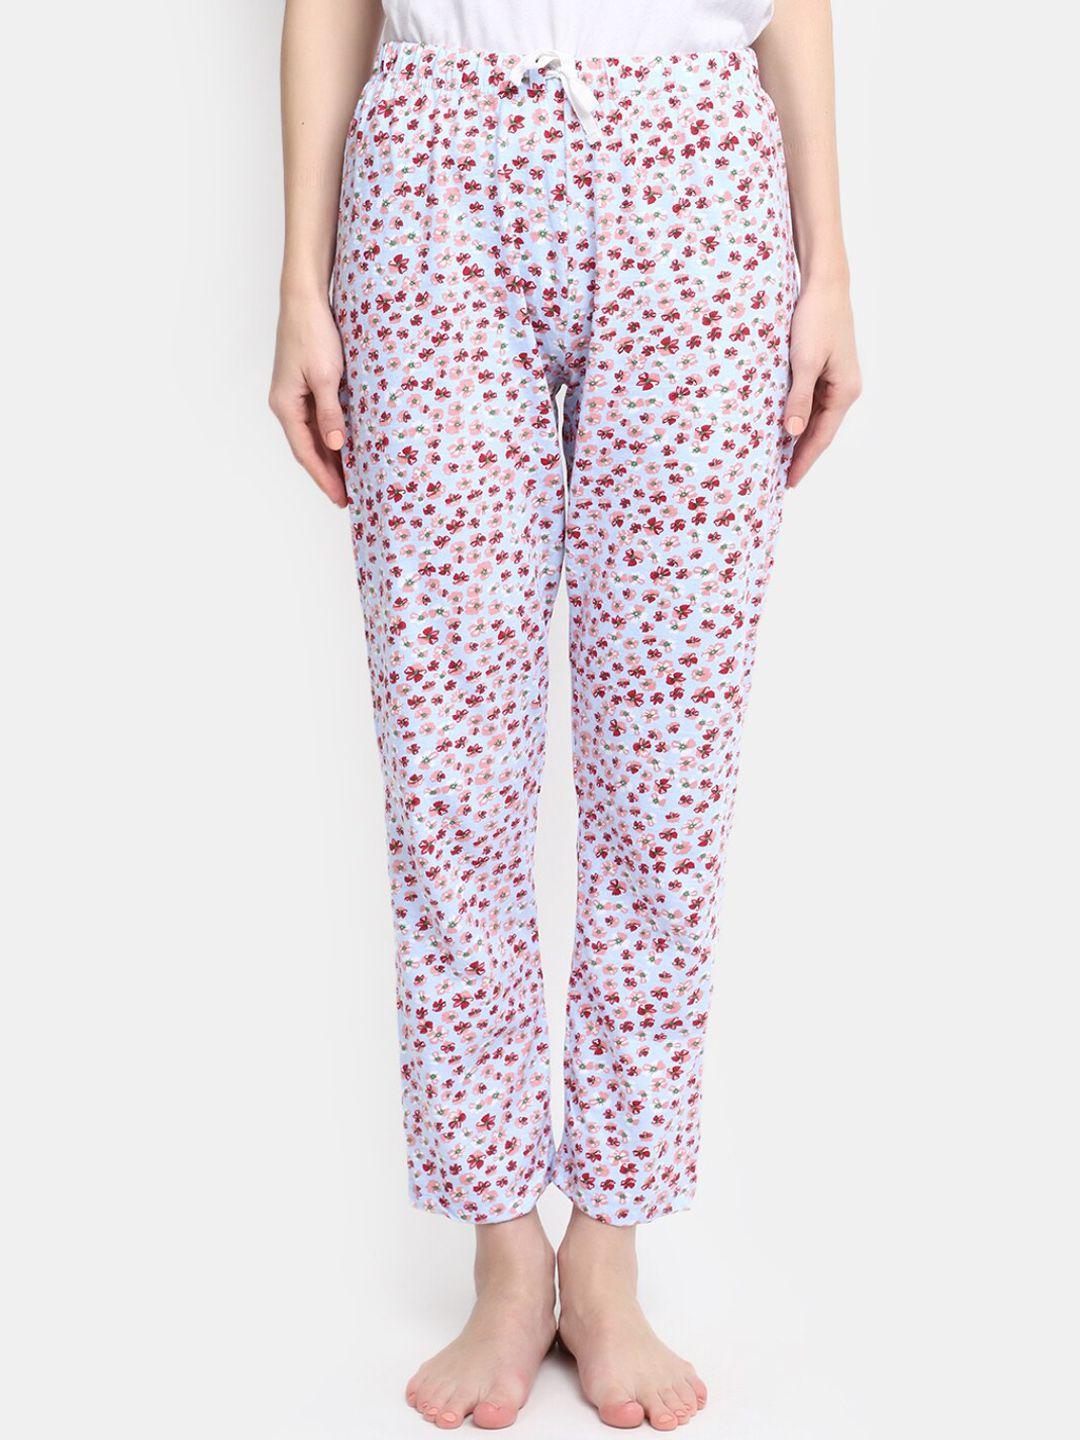 v-mart women floral printed mid-rise cotton lounge pants